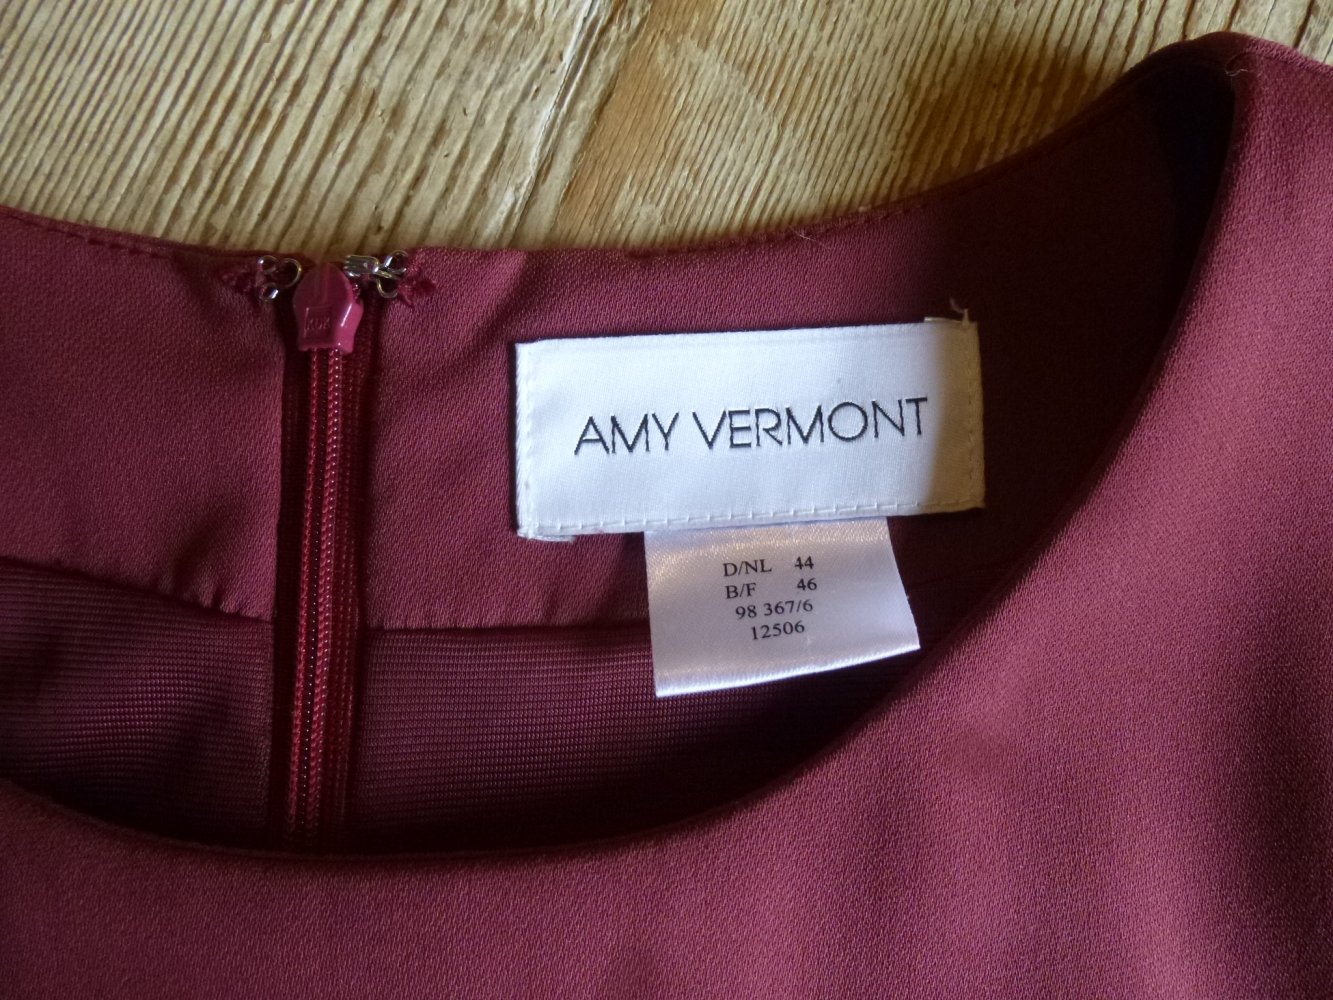  Amy Vermont Kleid rot Gr. 44 Kurzarm Stickerei